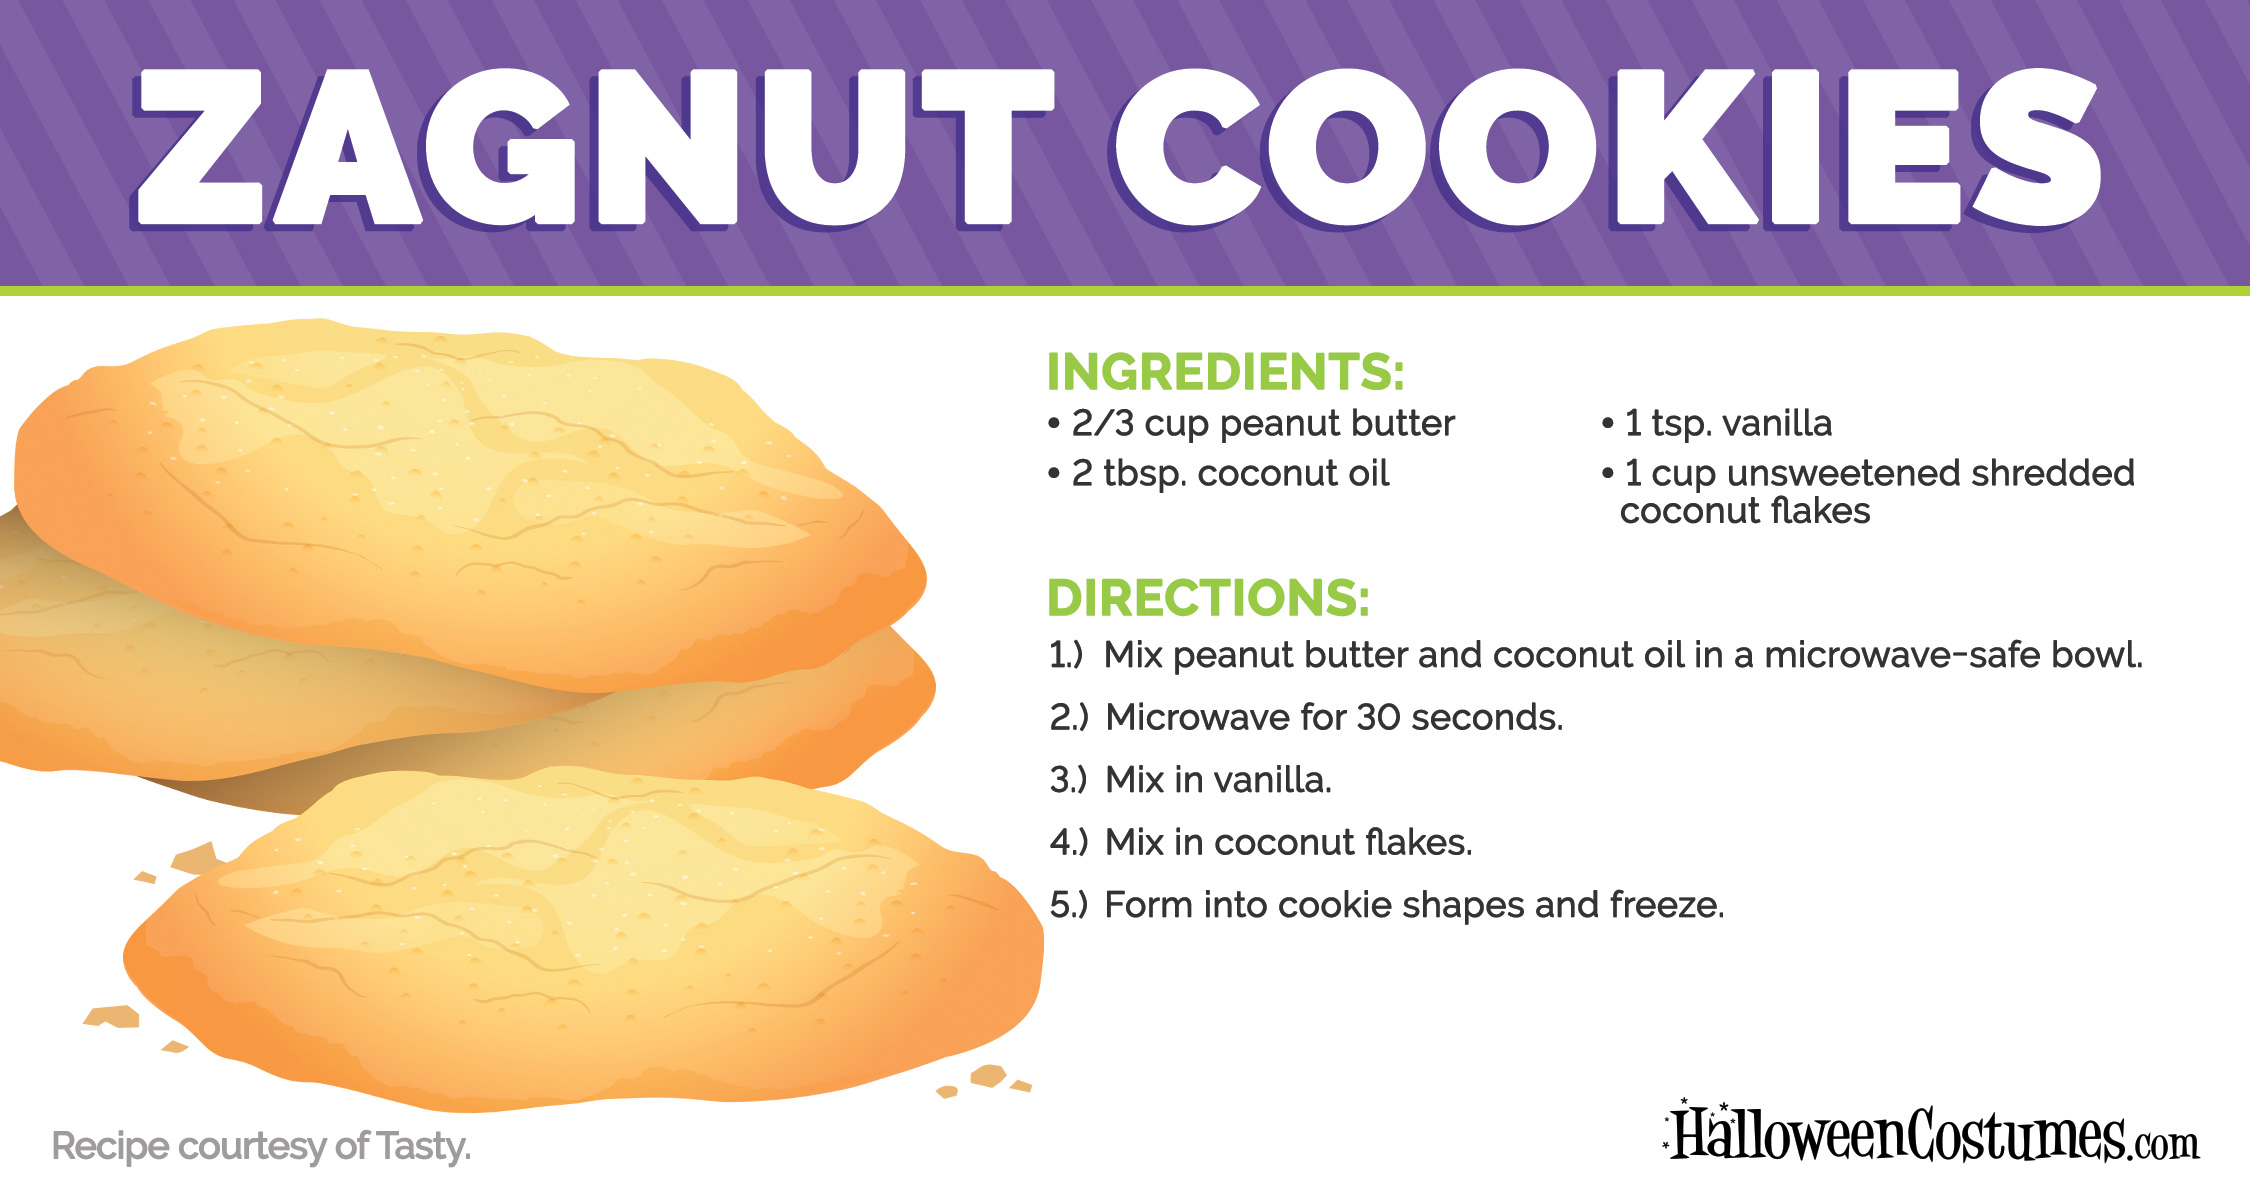 Beetlejuice Zagnut Cookies Recipe